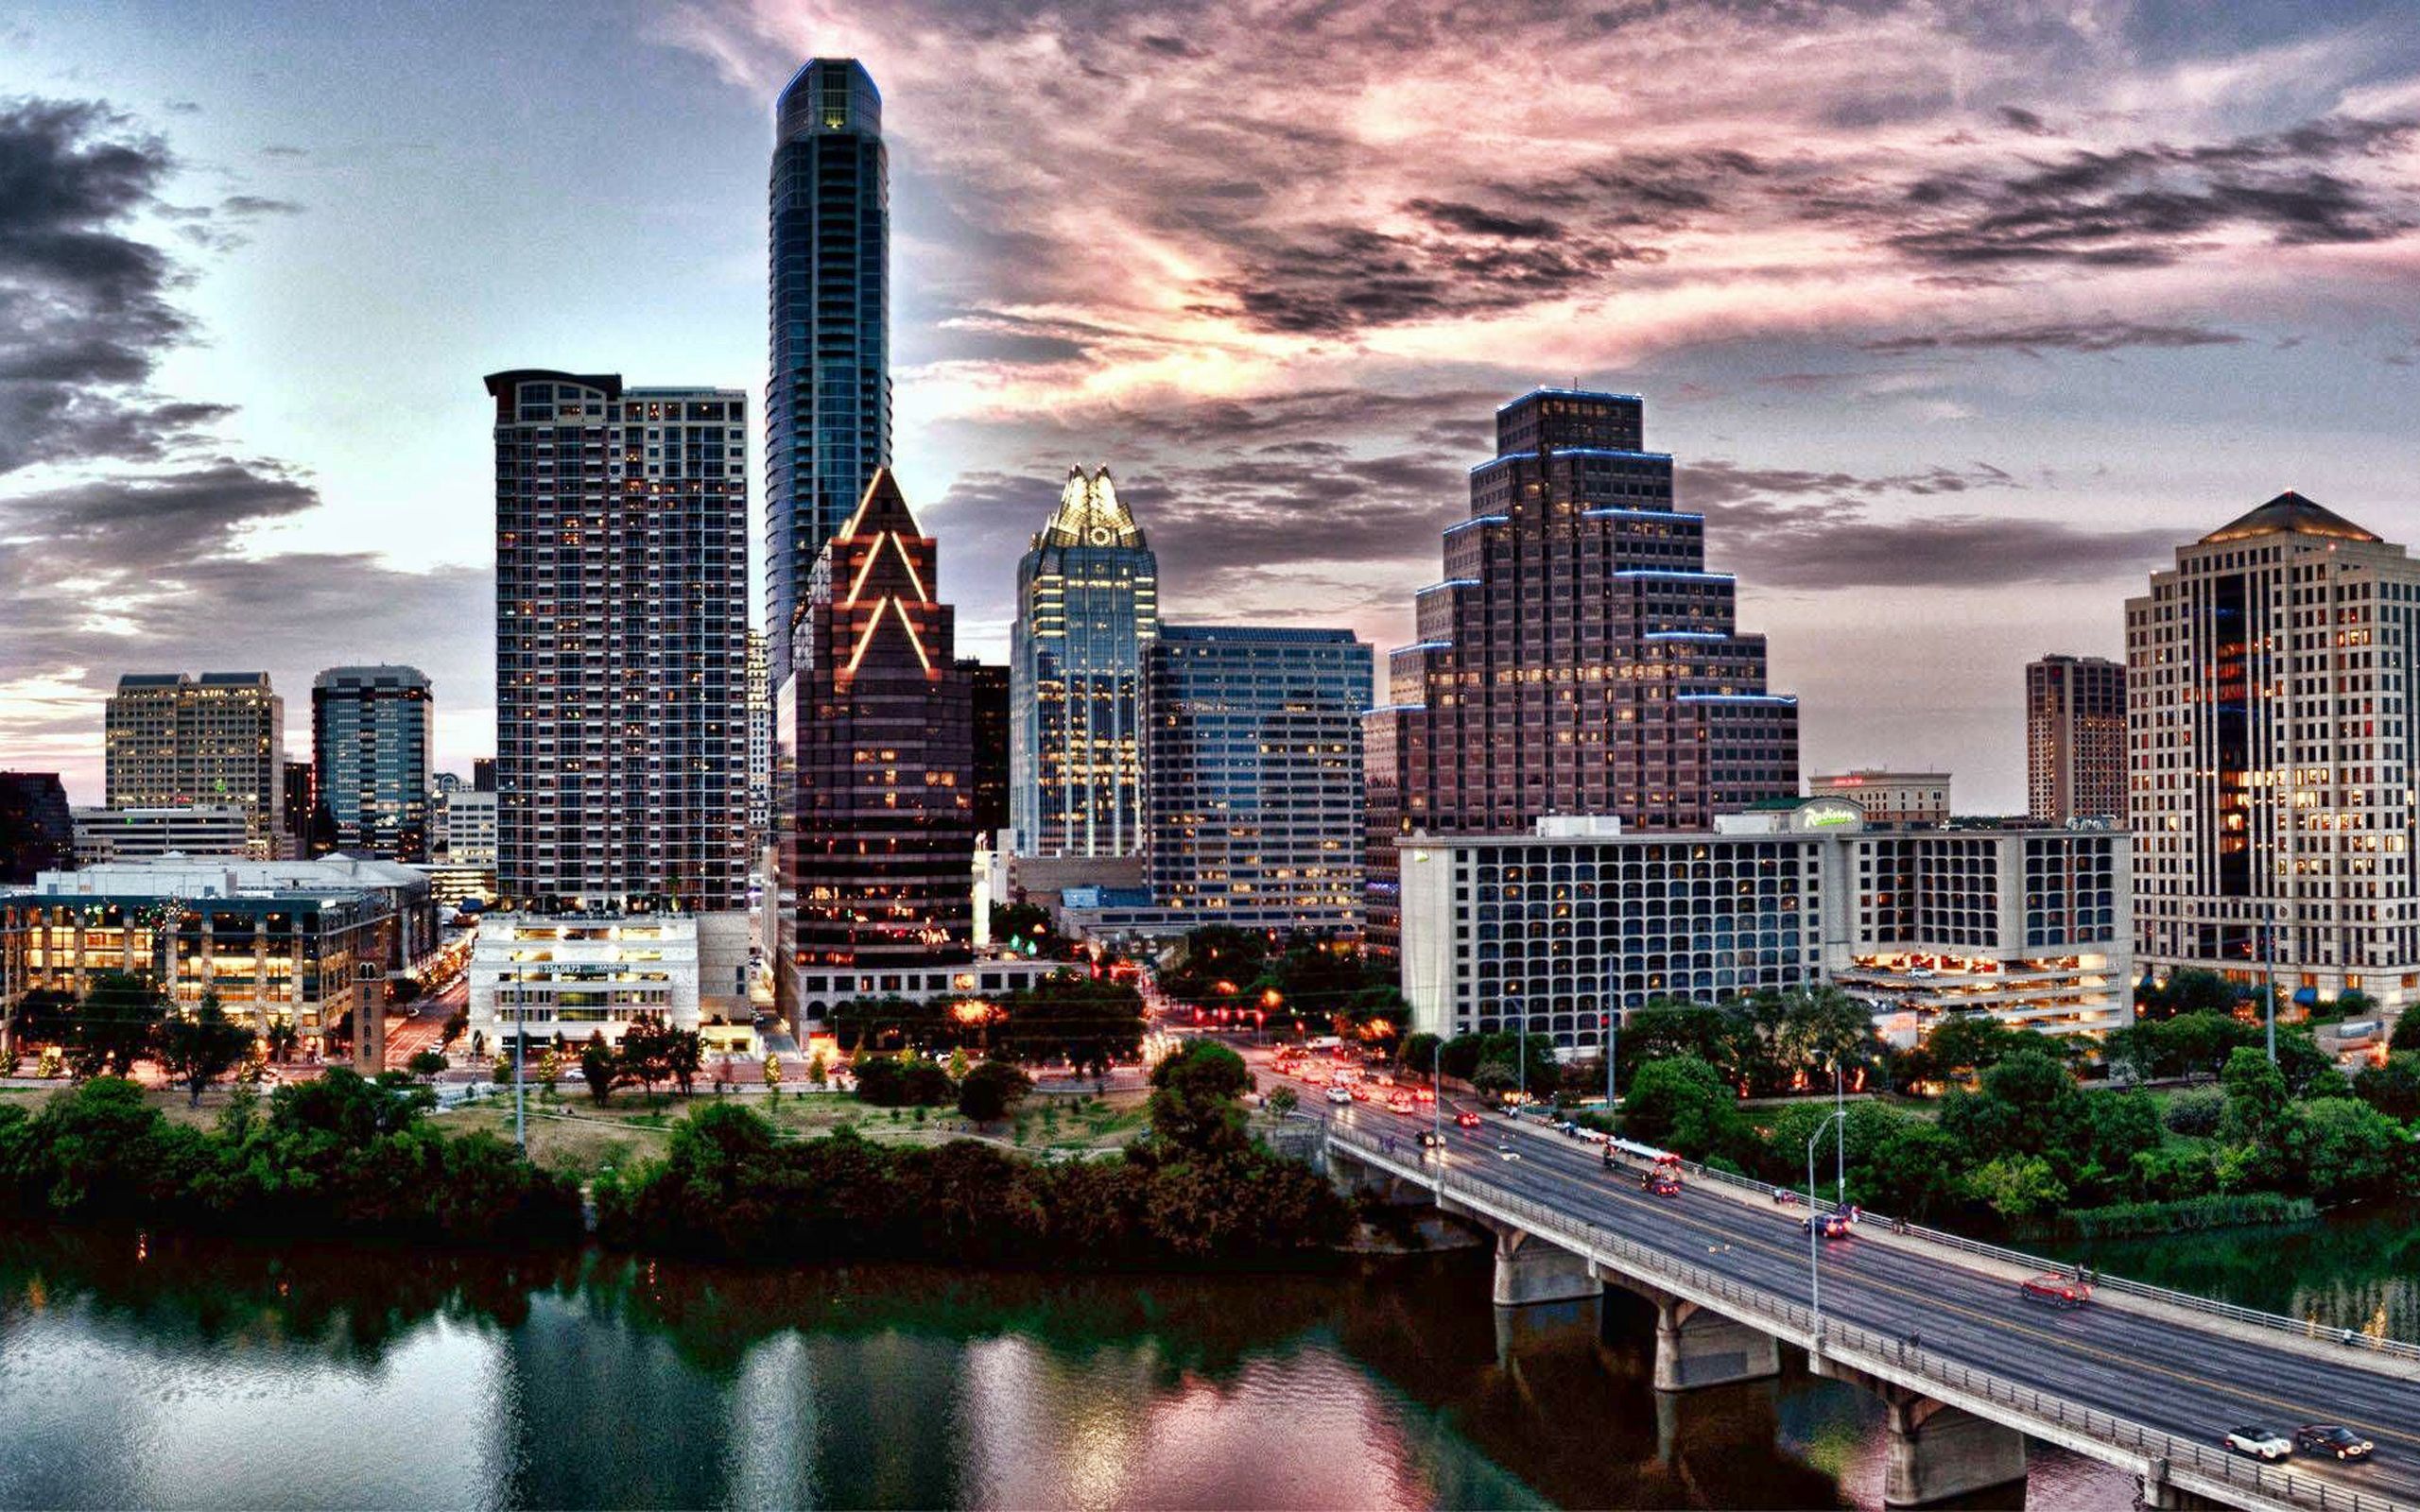 Download wallpaper Austin, capital of Texas, evening, sunset